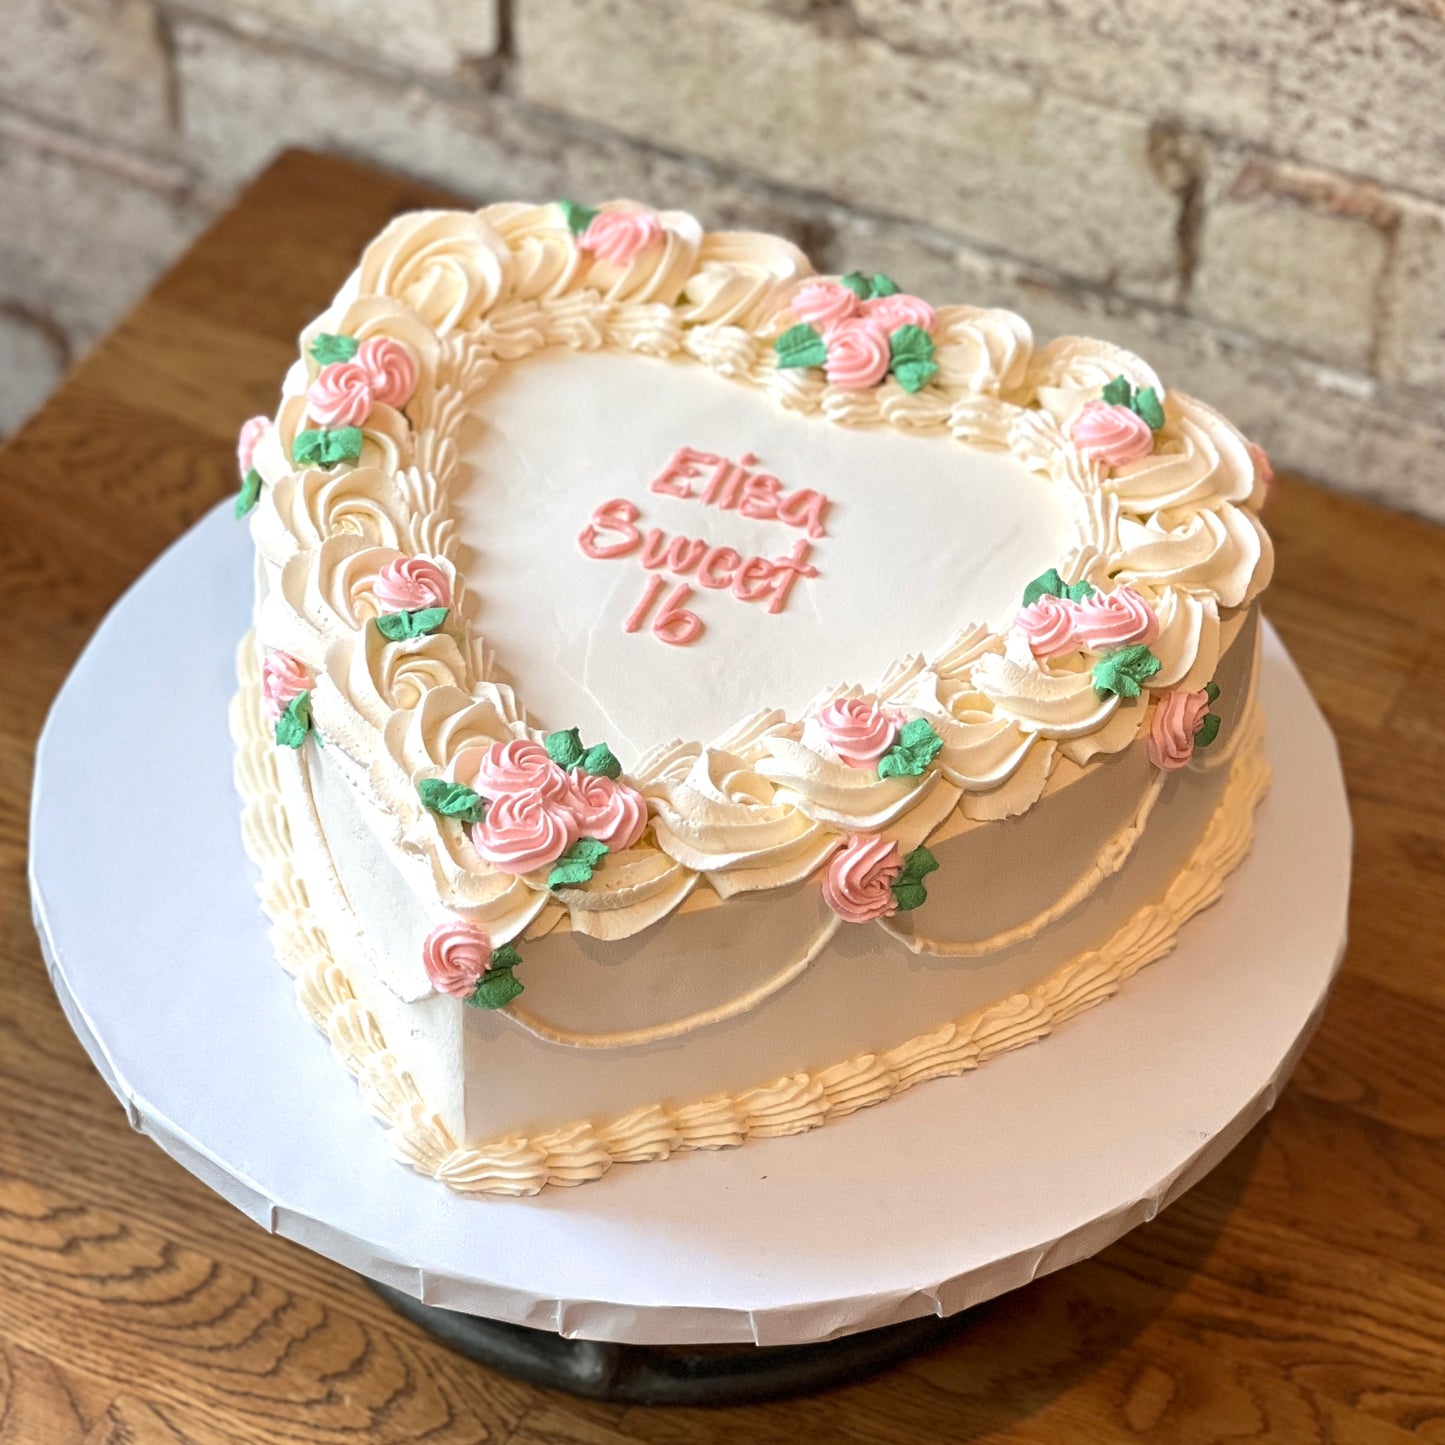 Retro white heart-shaped cake